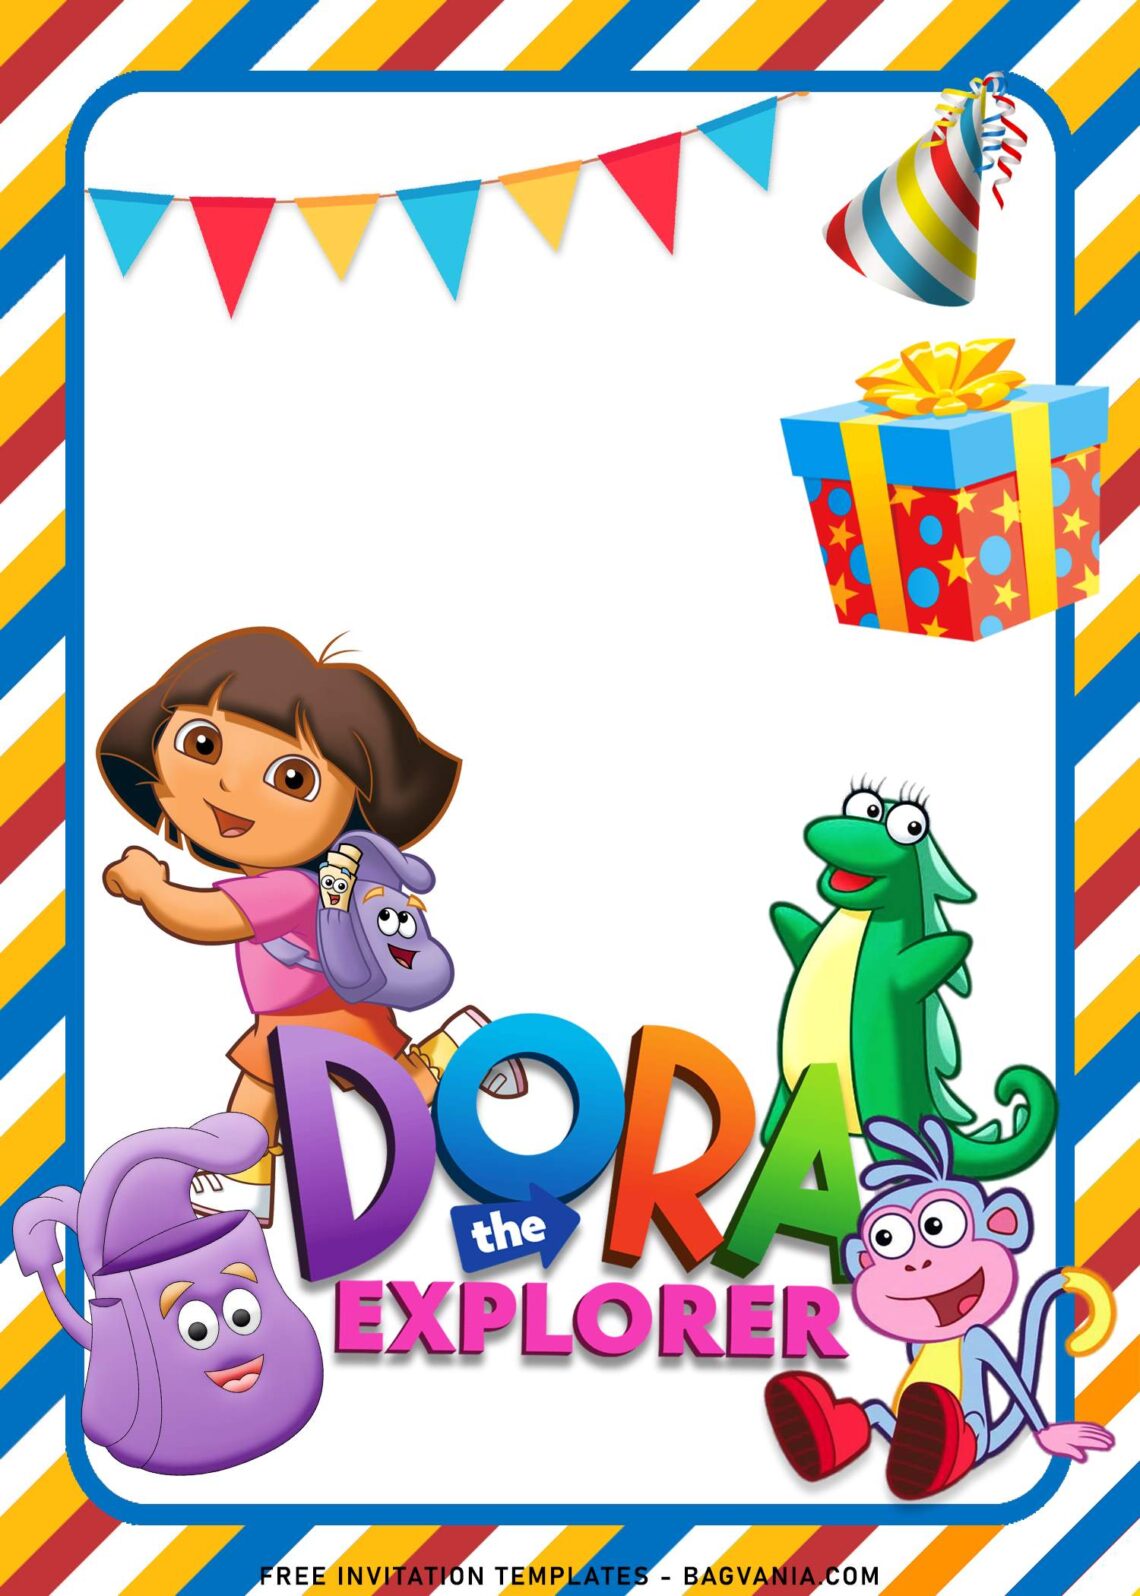 8+ Dora The Explorer Fiesta Birthday Party Invitation Templates | FREE ...